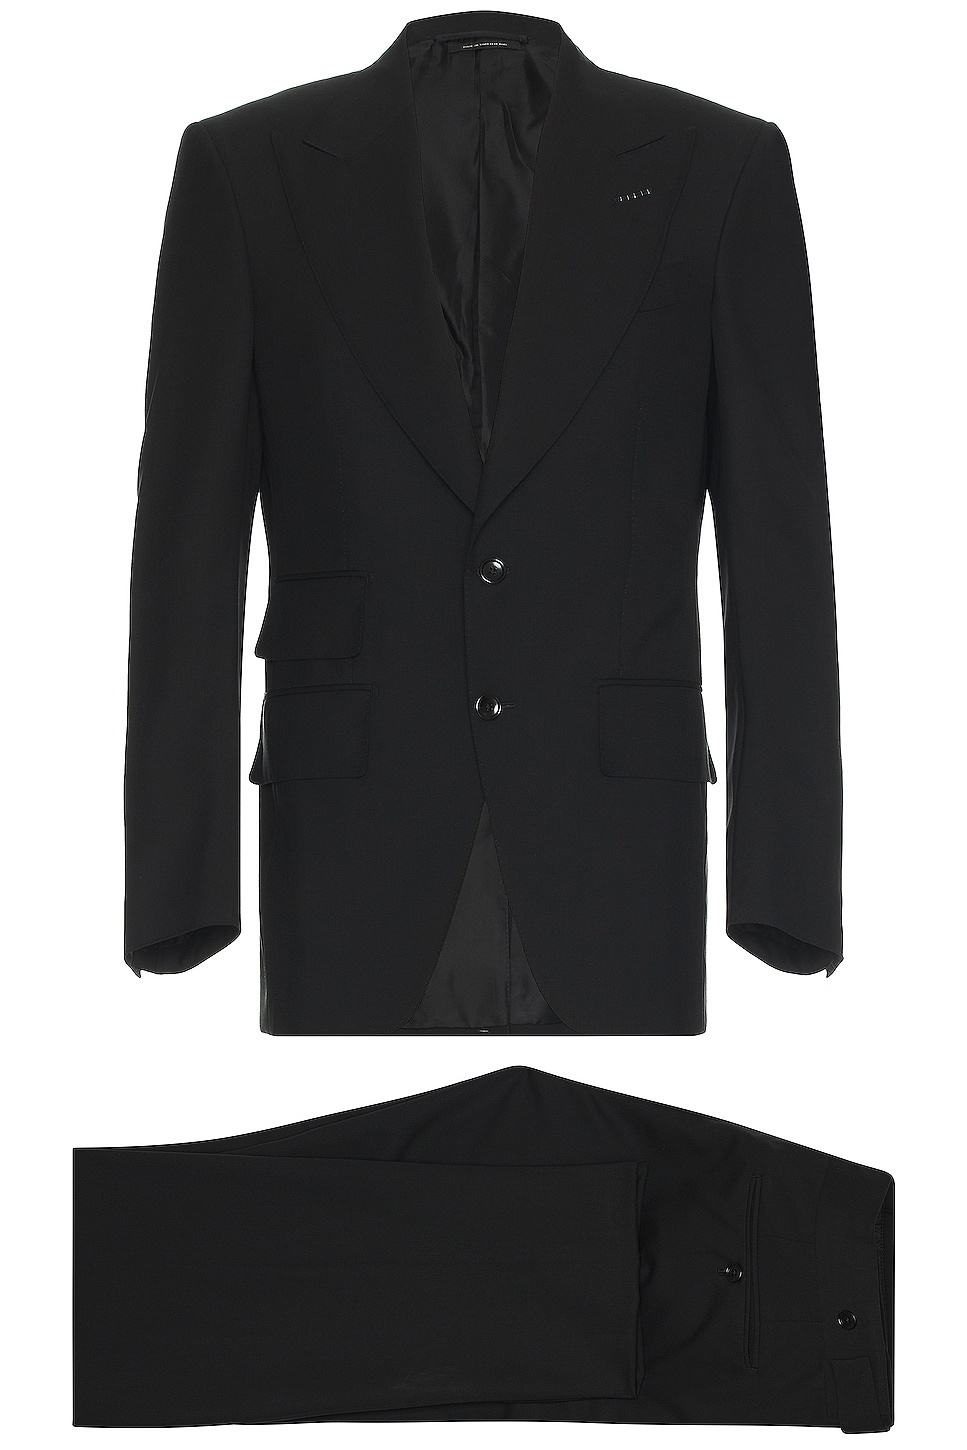 Atticus Plain Weave Suit - 1